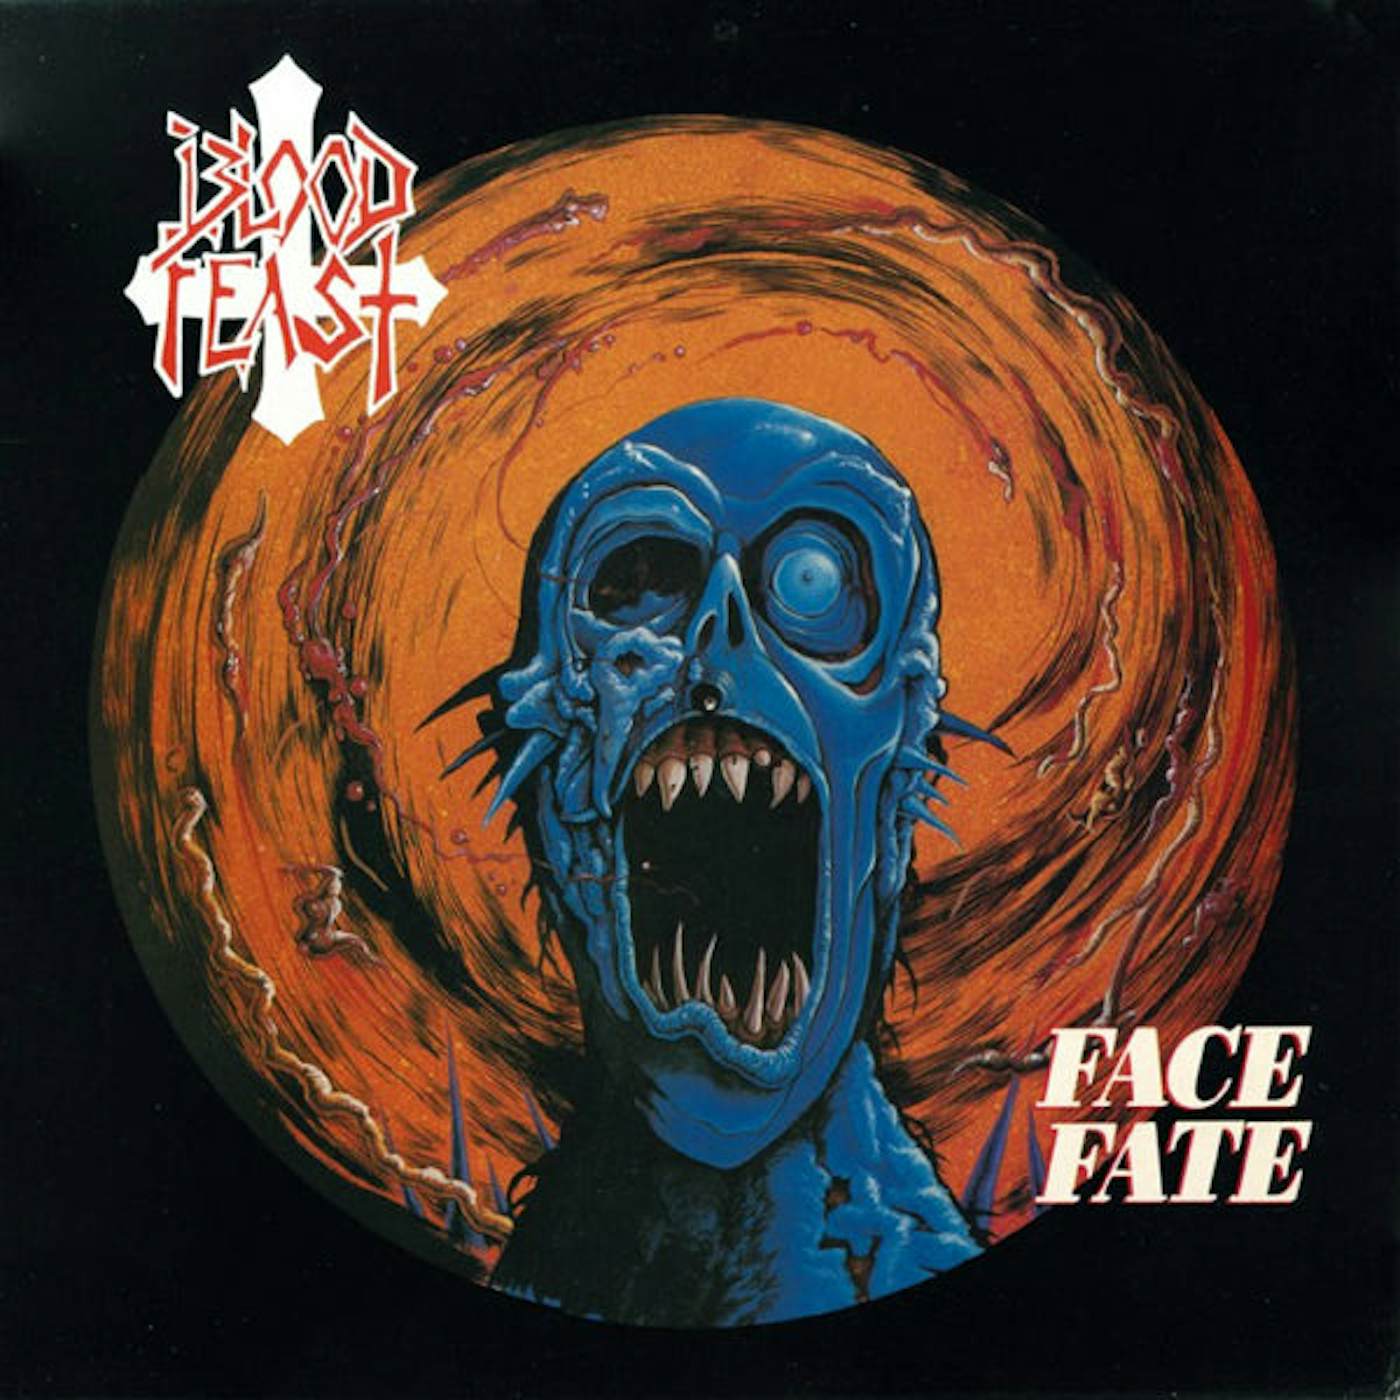 Blood Feast LP - Face Fate (Orange / Purple Splatter Vinyl)